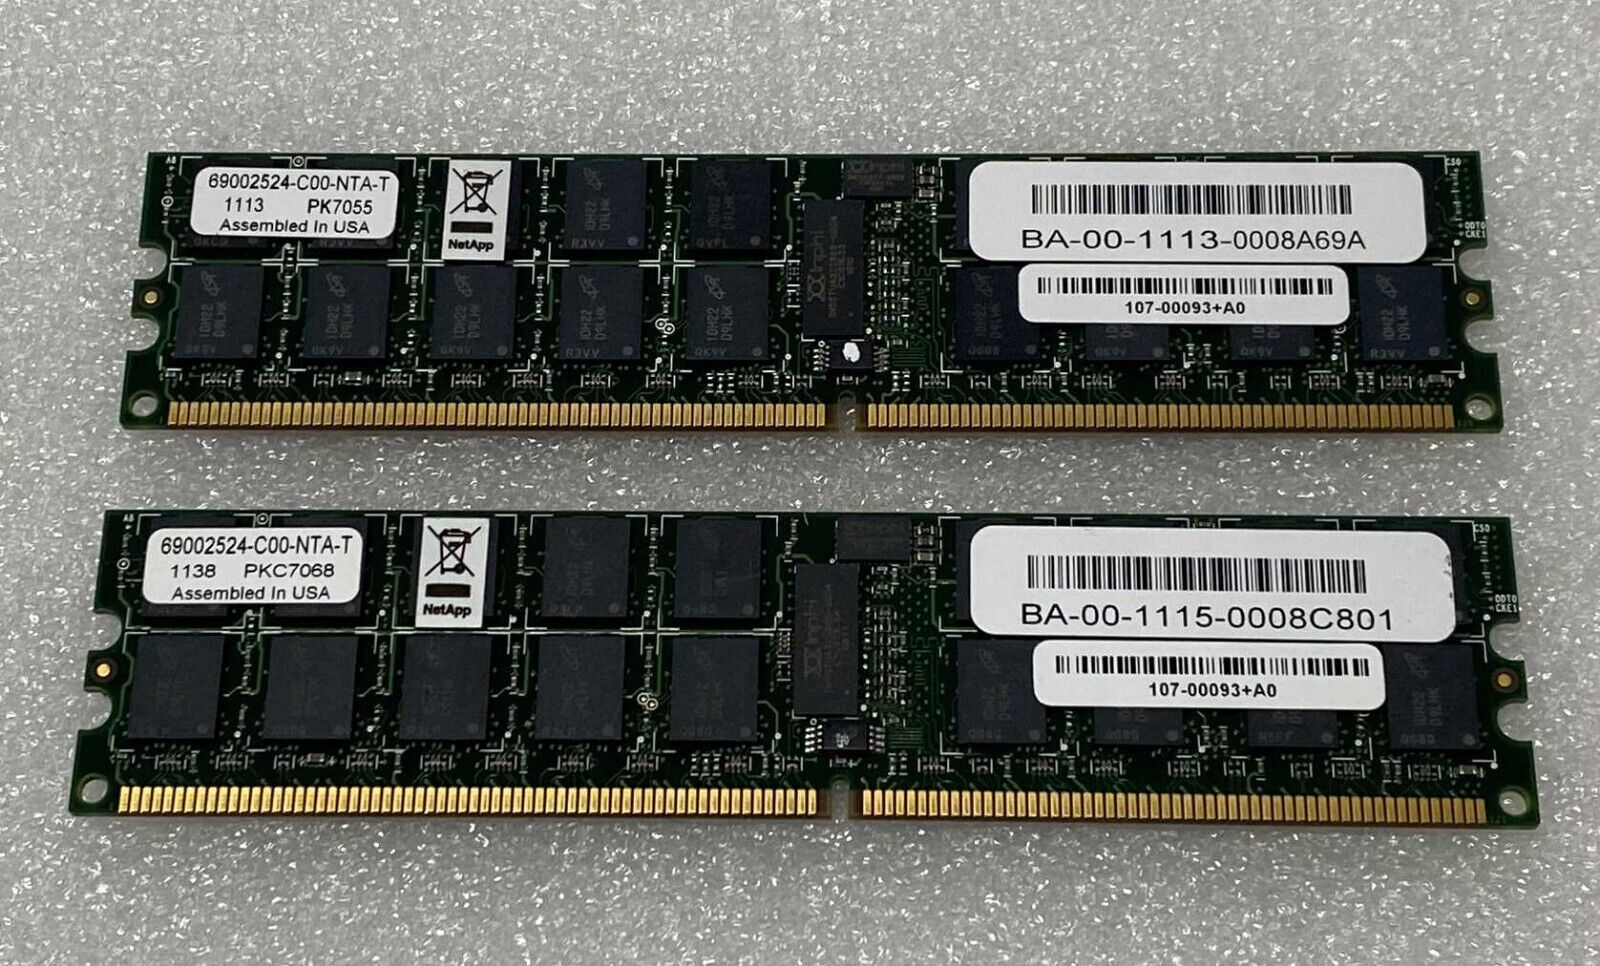 2x NETAPP 107-00093+A0 X3250-R6 4GB DIMM Memory Module for FAS3240 FAS3270 Filer